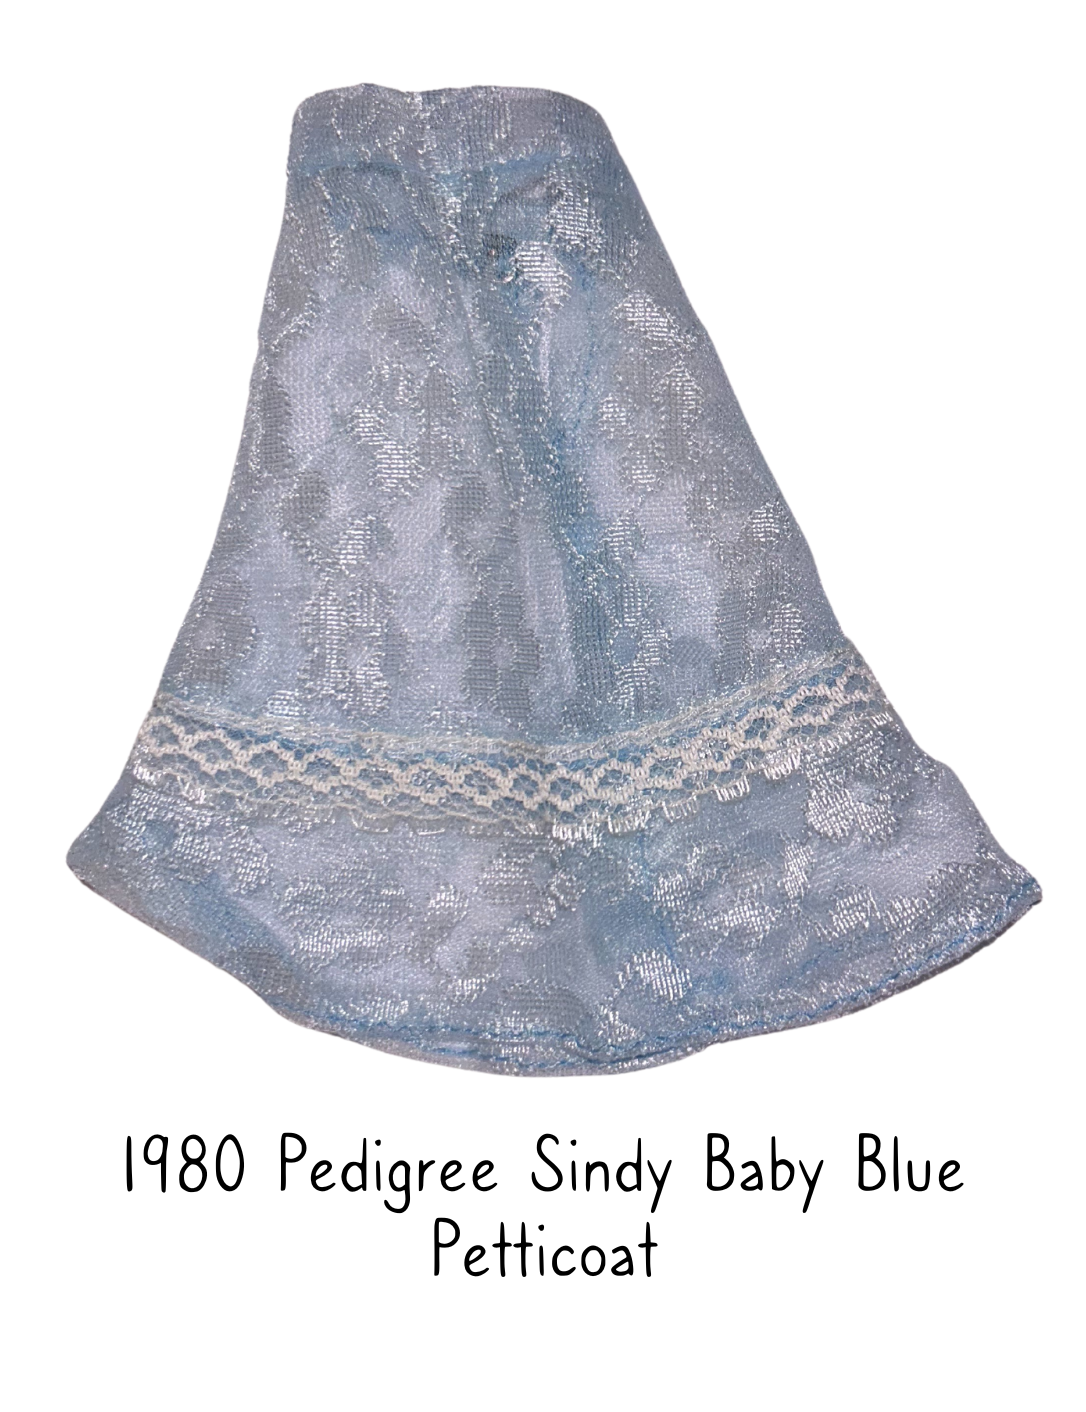 1980 Pedigree Sindy Baby Blue Petticoat